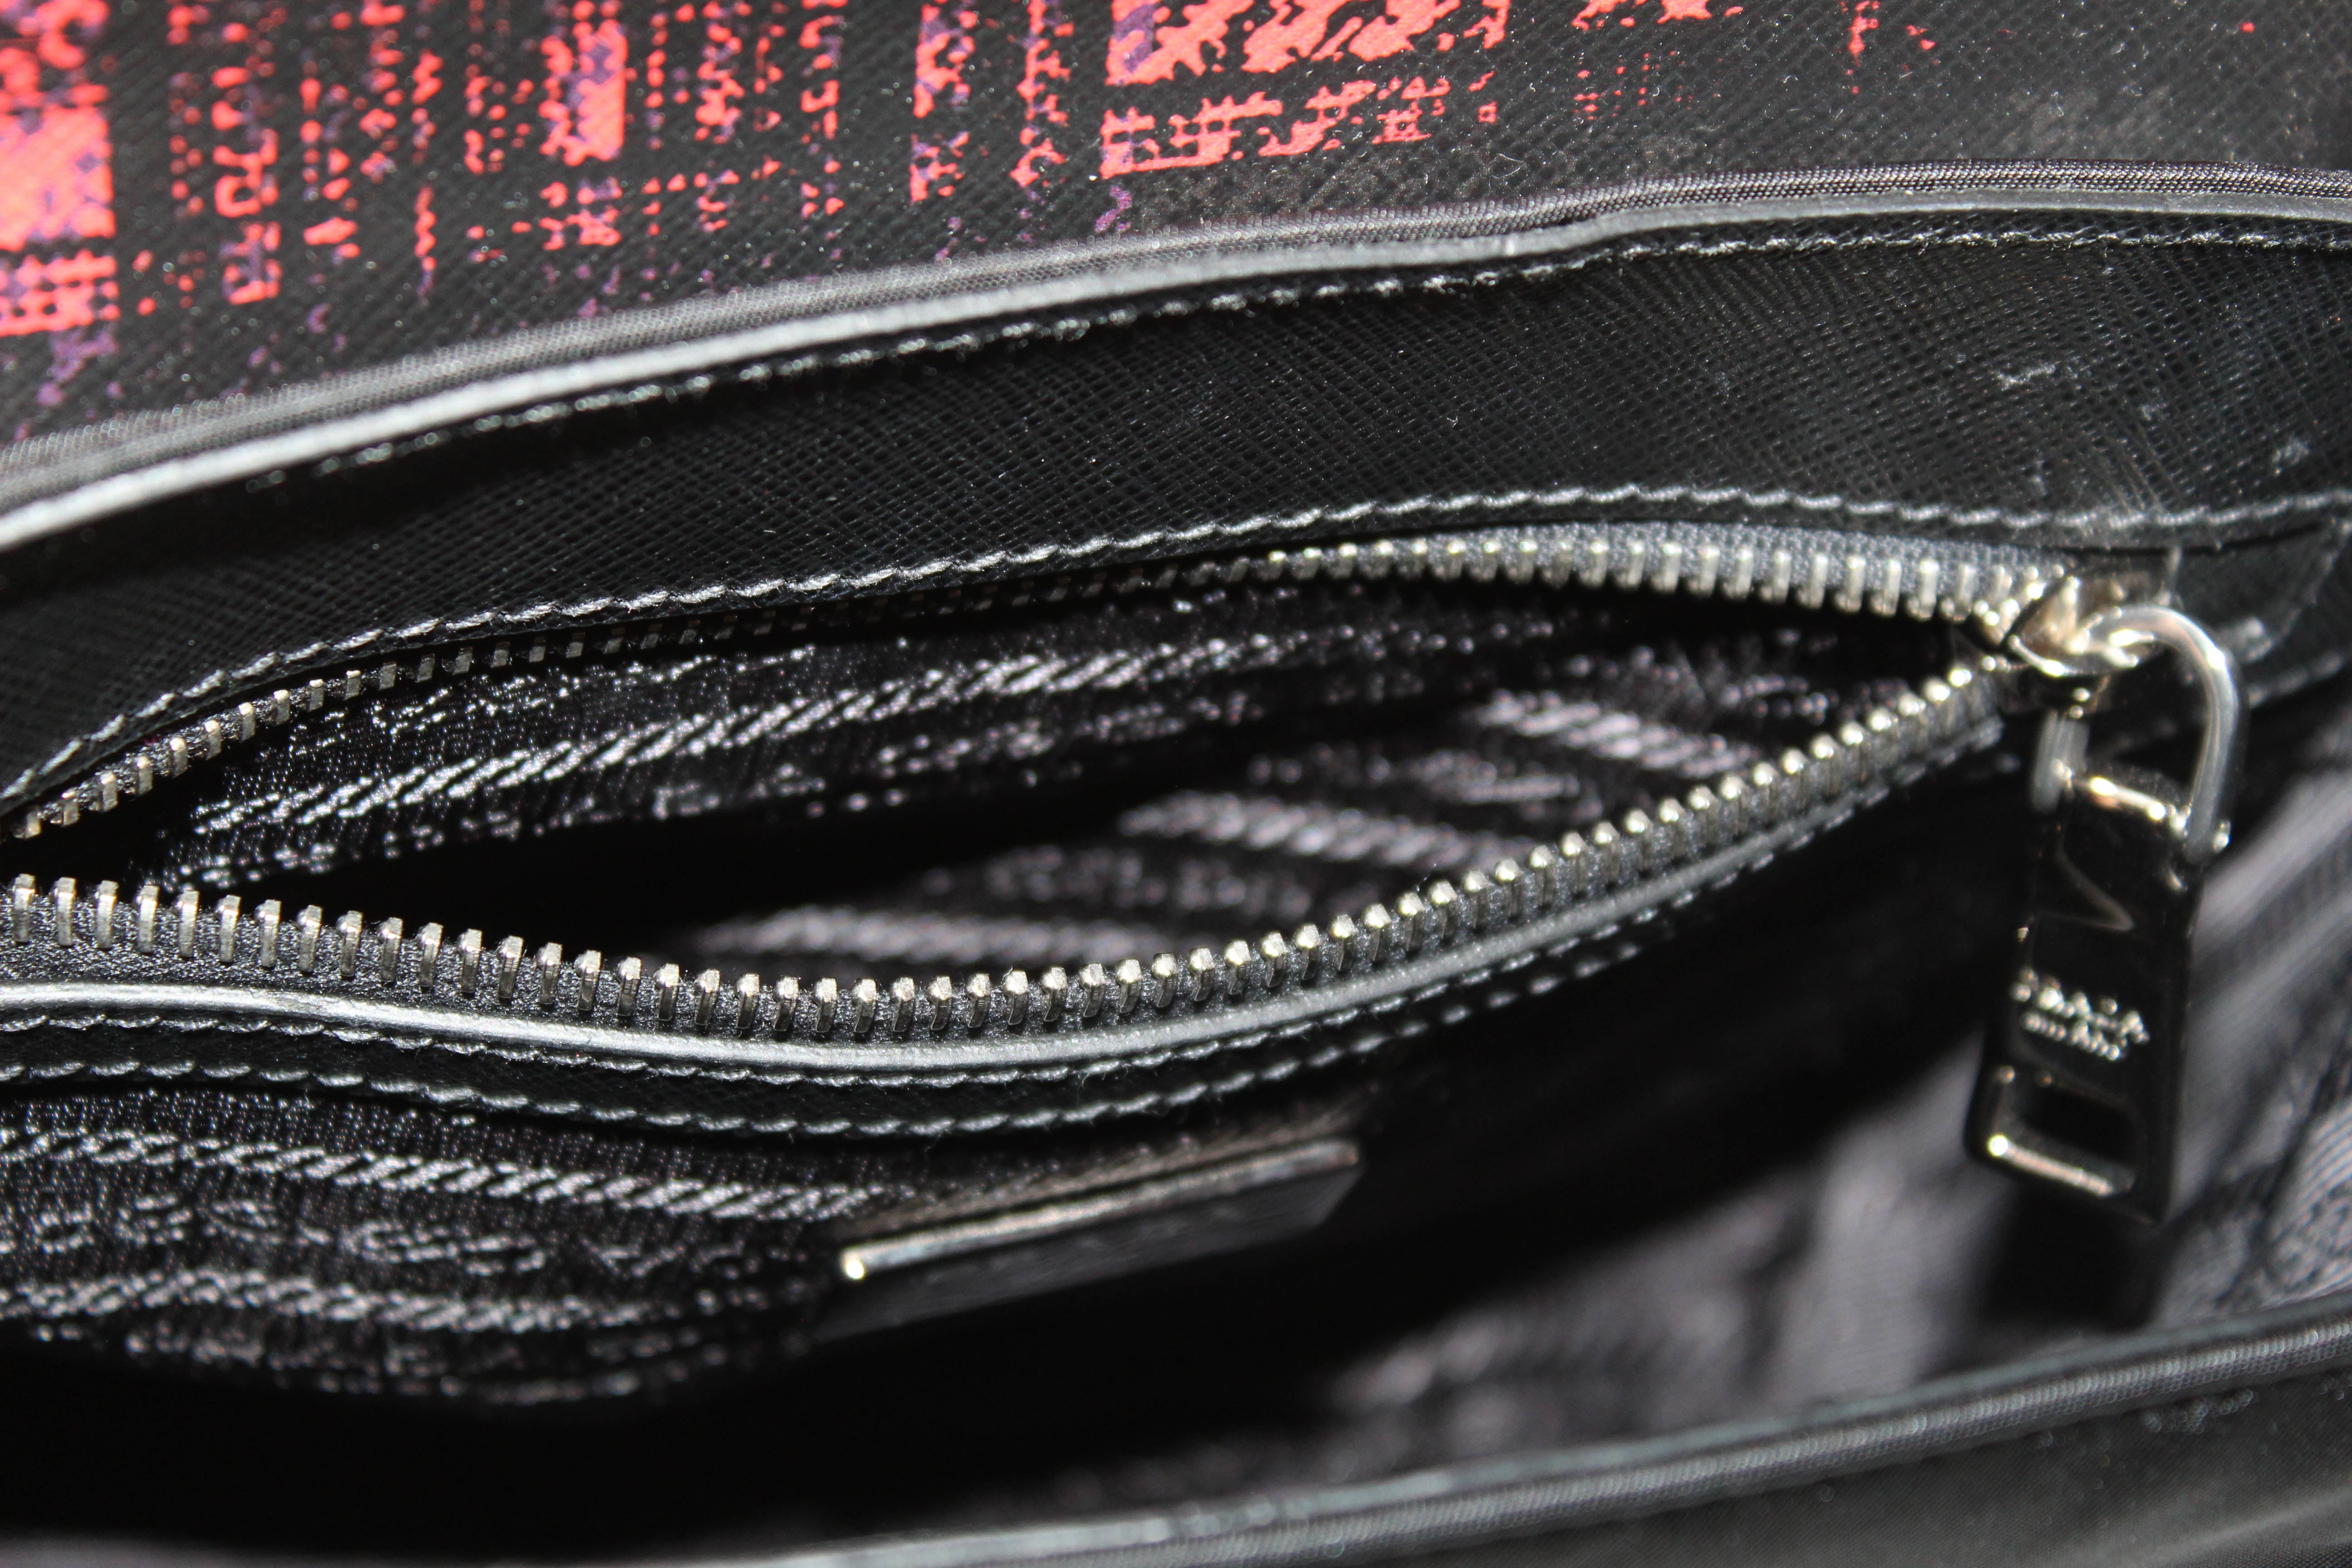 Prada Metallic Leather Top-Handle Bag